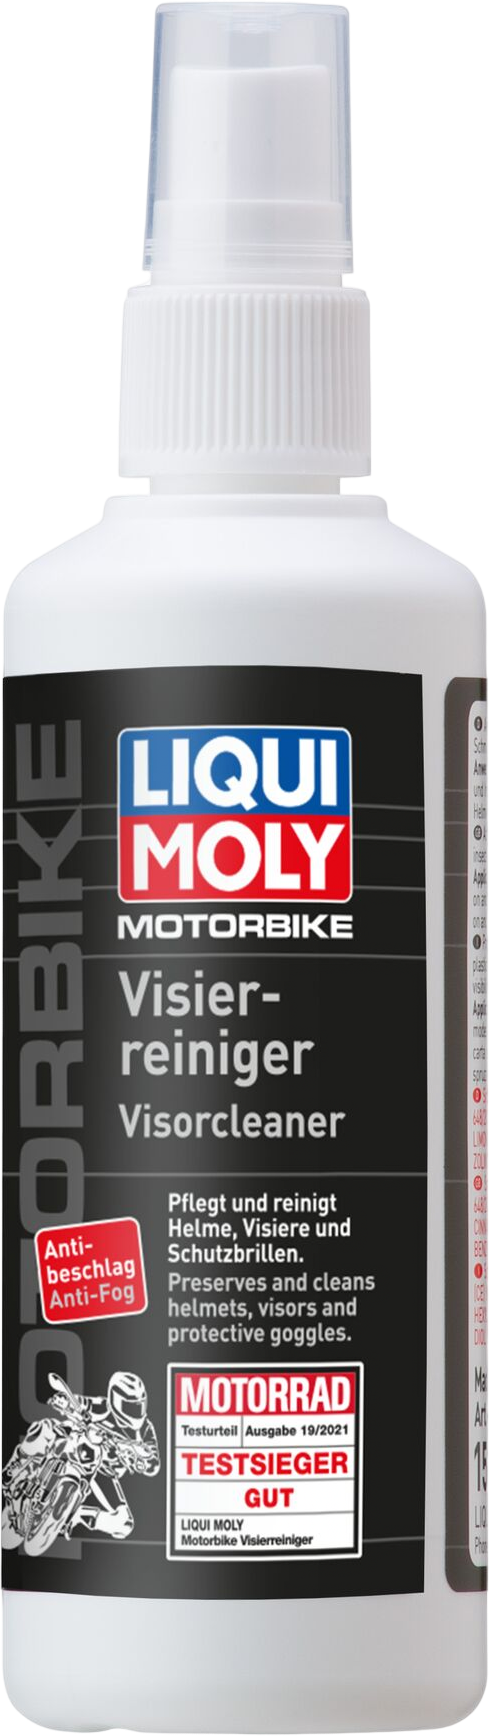 Liqui Moly Motorbike Vizierreiniger, 100 ml